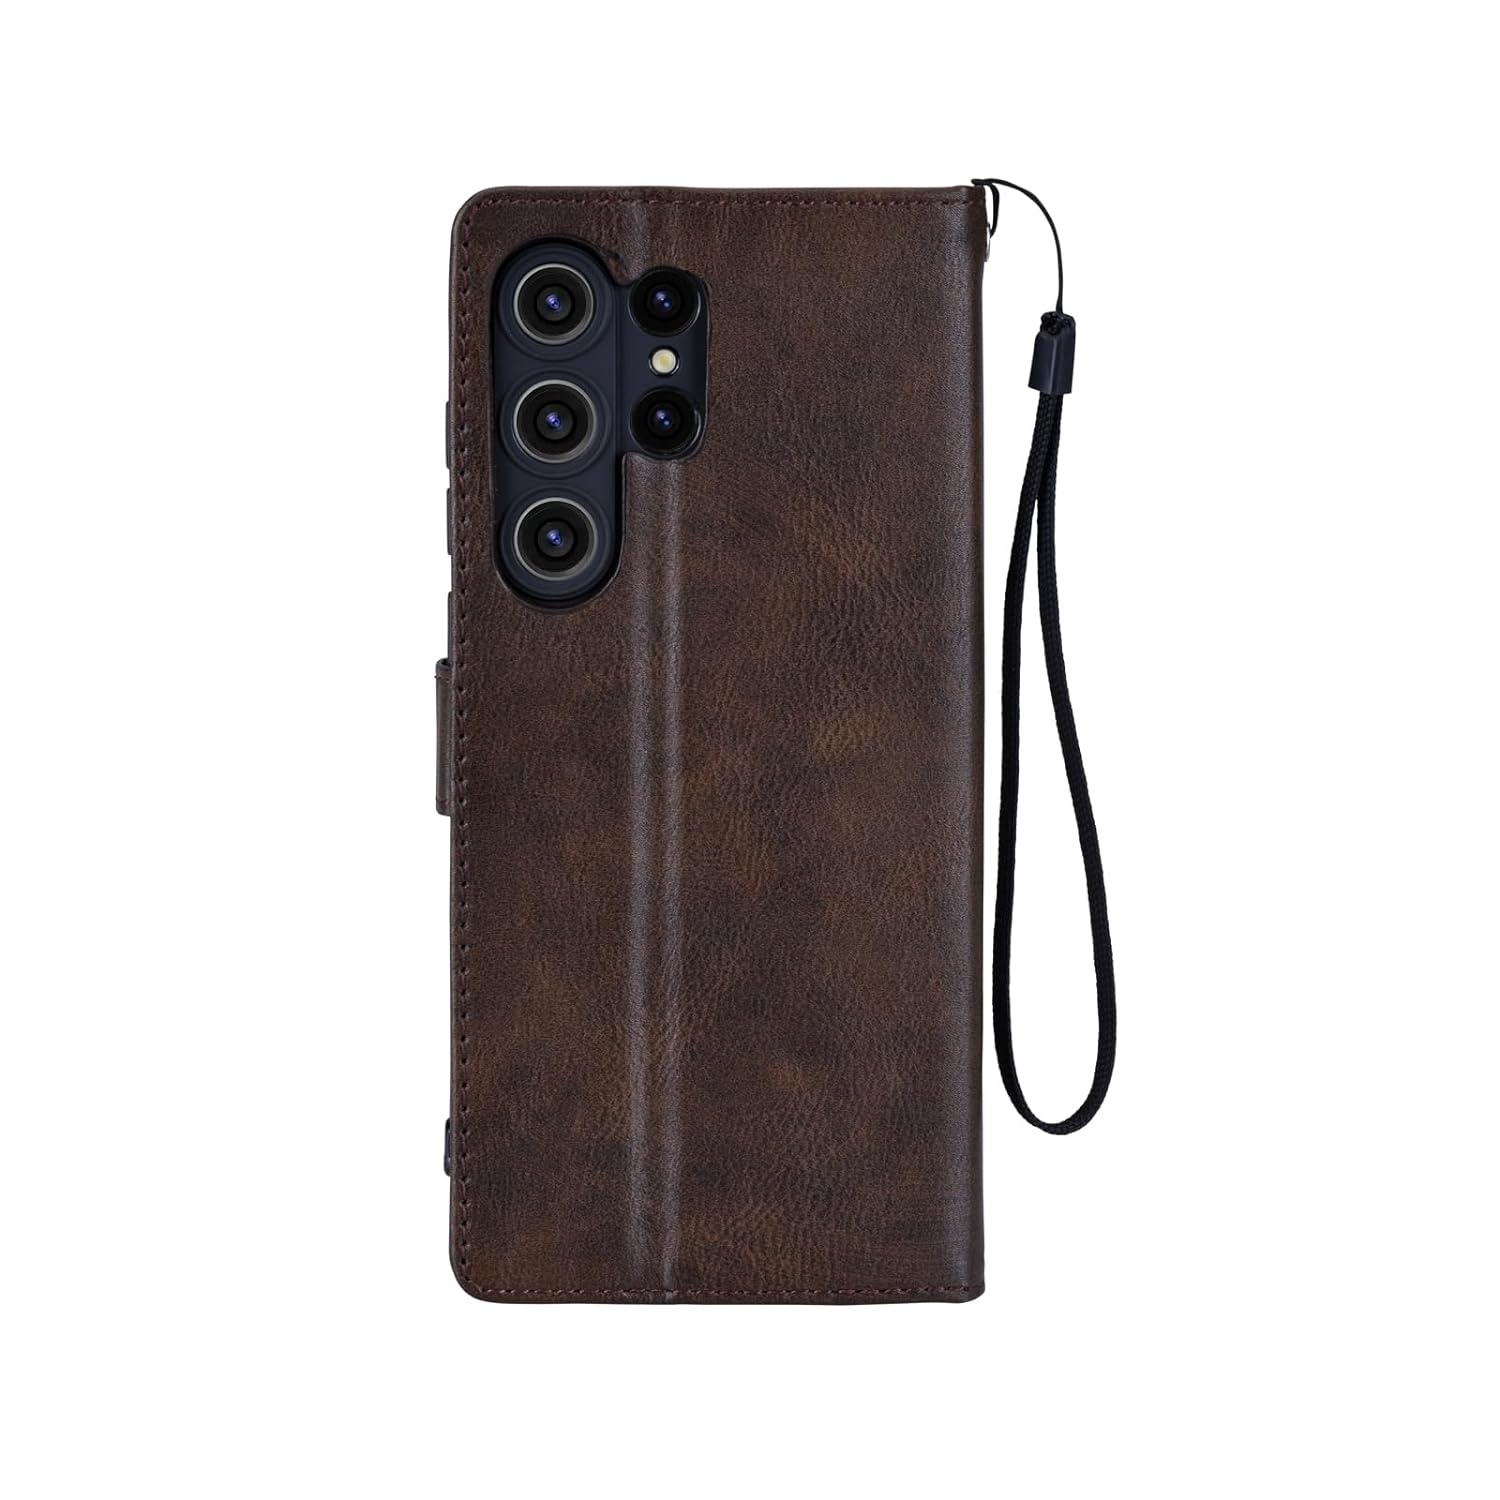 Bracevor Premium Design Flip Cover leather wallet case for Samsung Galaxy S24 Ultra 5G